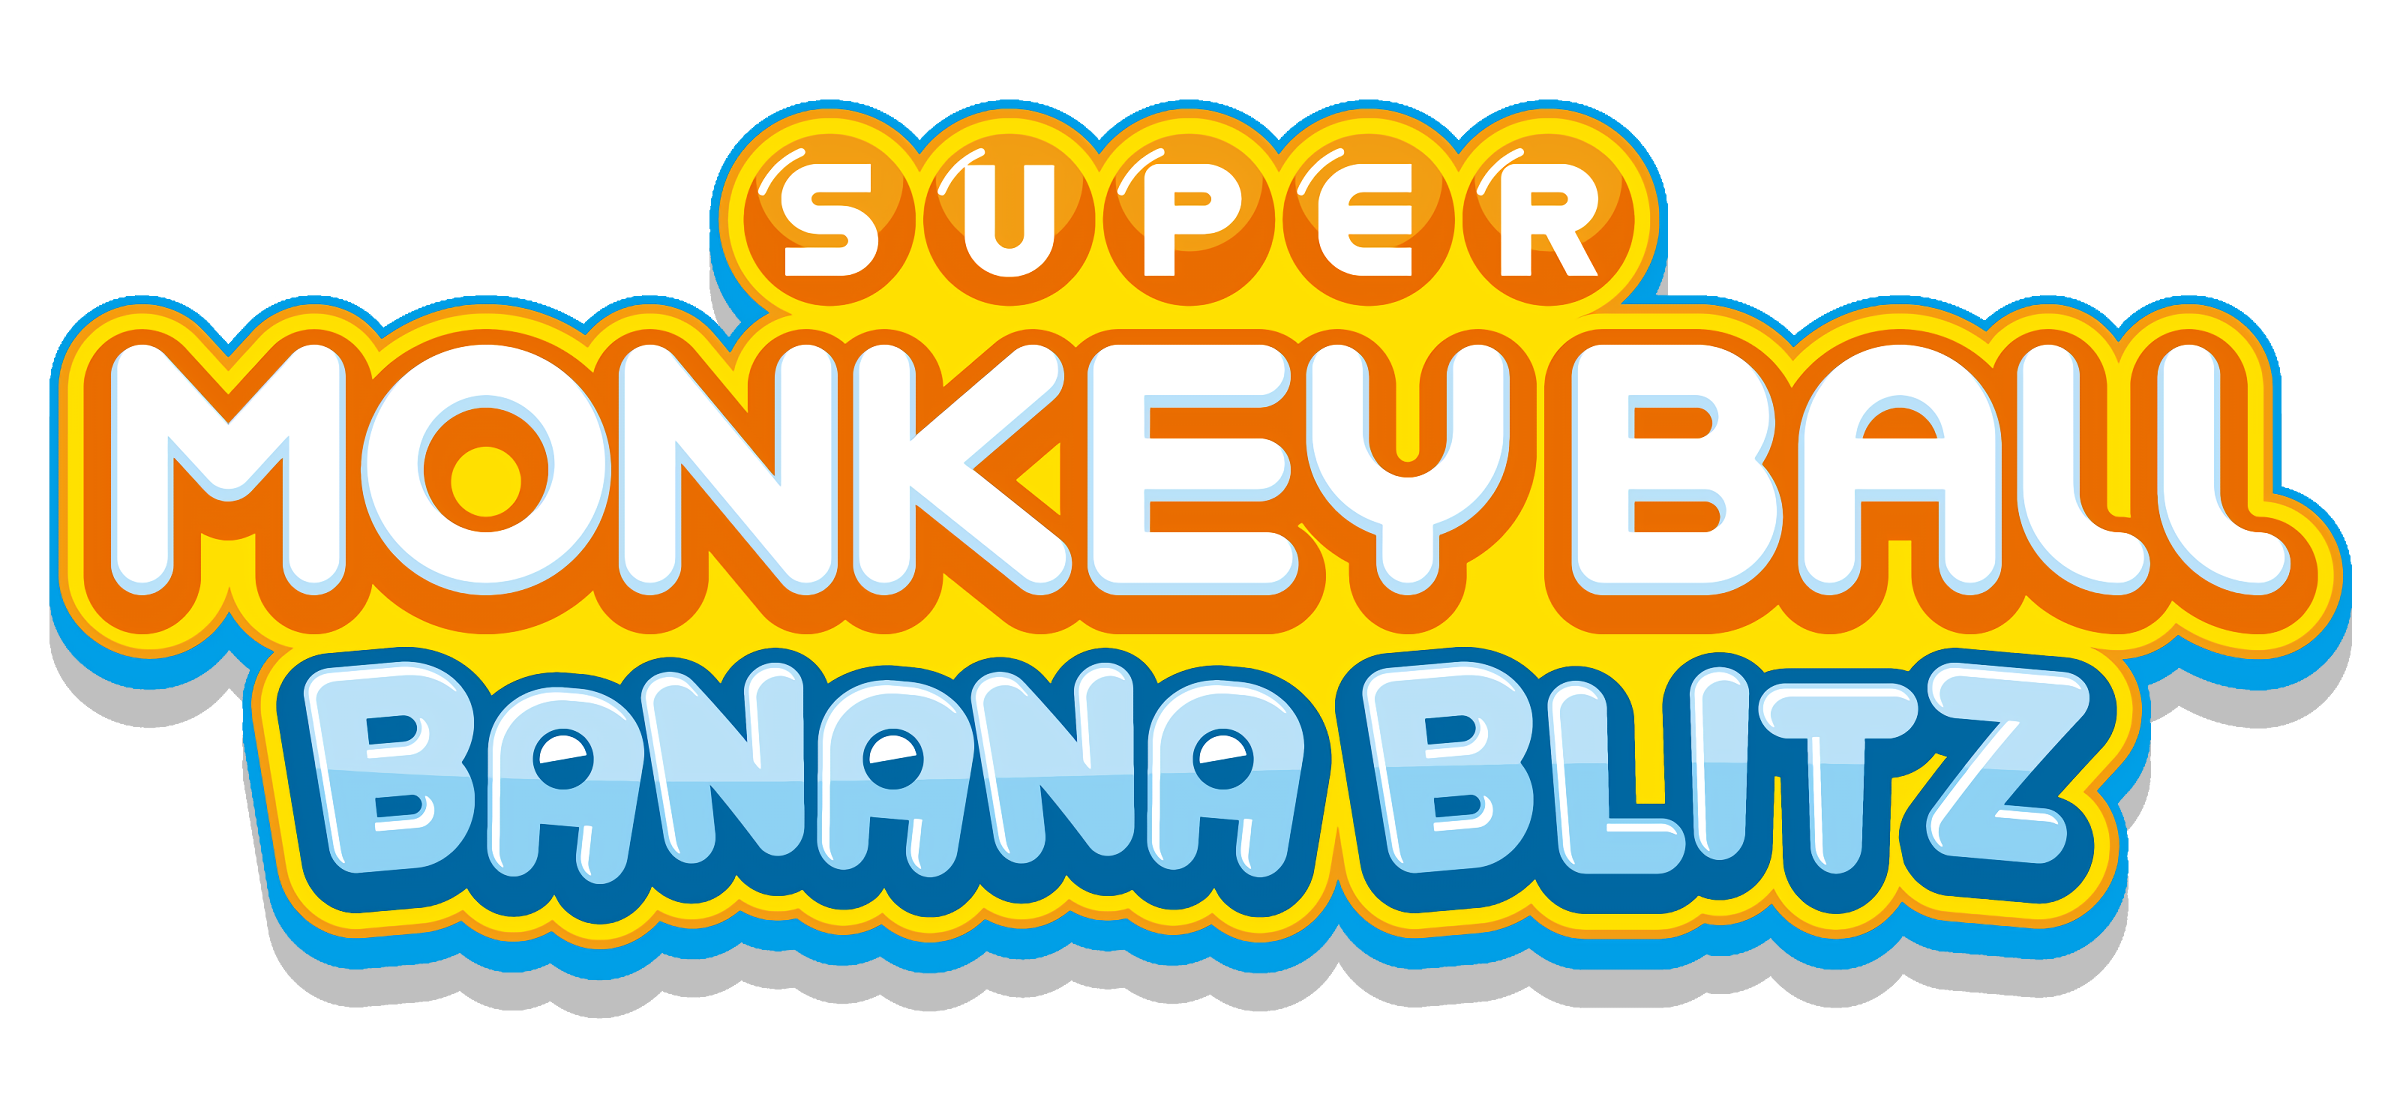 Super monkey ball banana. Super Monkey Ball: Banana Blitz Wii. Super Monkey Ball Banana Blitz Doctor. Super Monkey Ball Banana Blitz Mini. Большемозглая super Monkey Ball Вики фэндом.